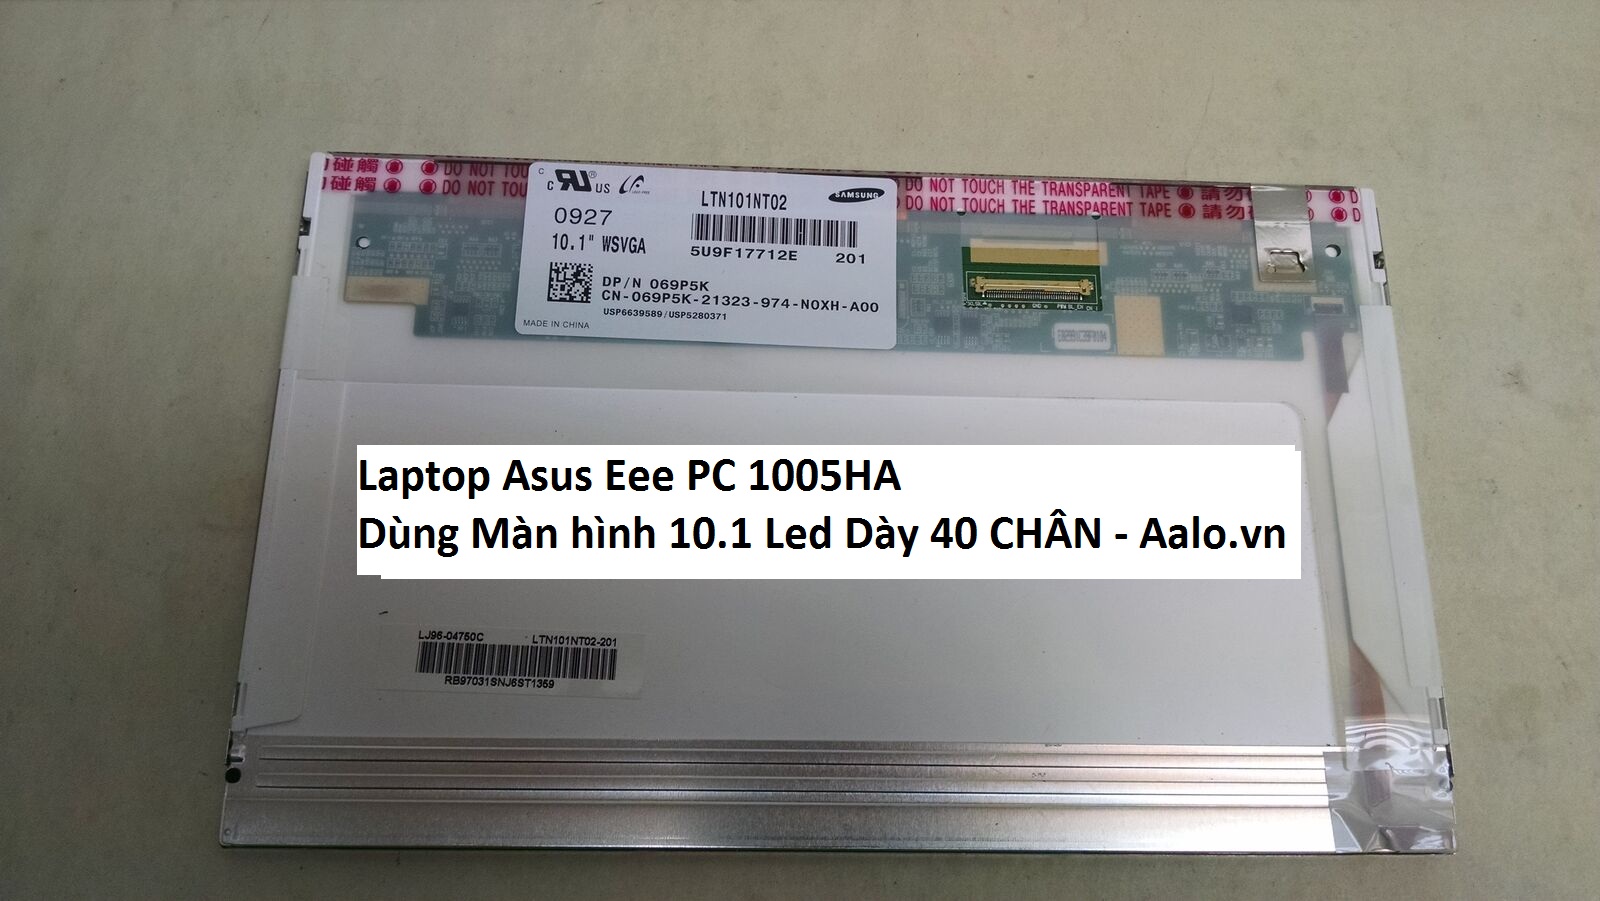 Màn hình Laptop Asus Eee PC 1005HA - Aalo.vn